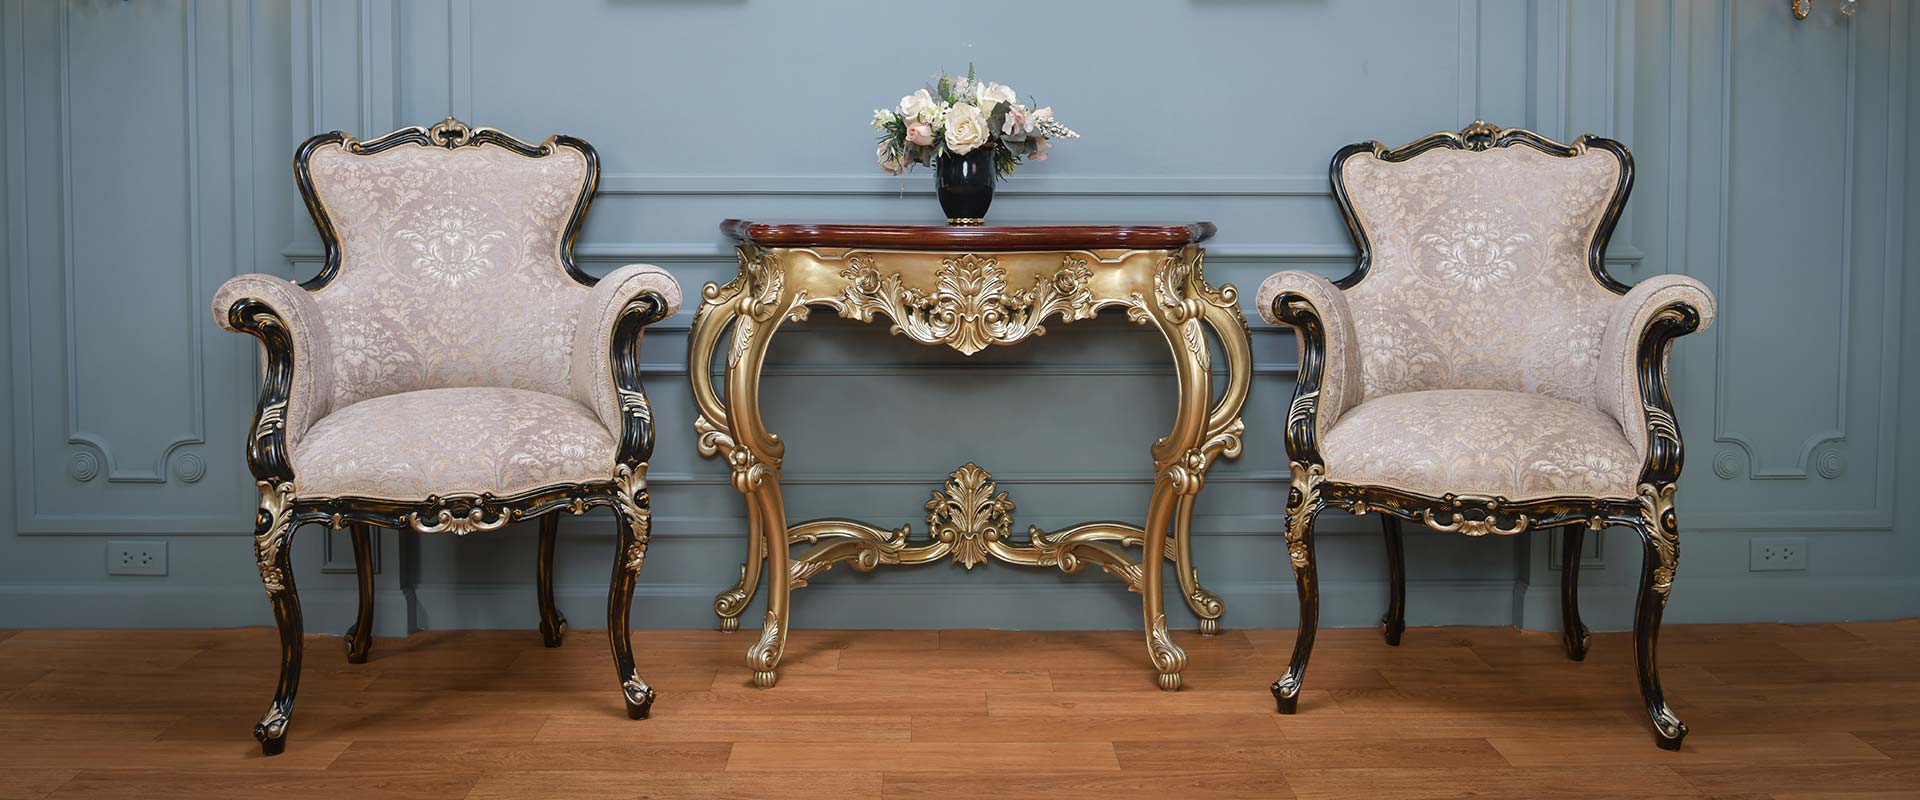 Italian Classic Design Furniture | Luxury Furniture Showroom Bangkok